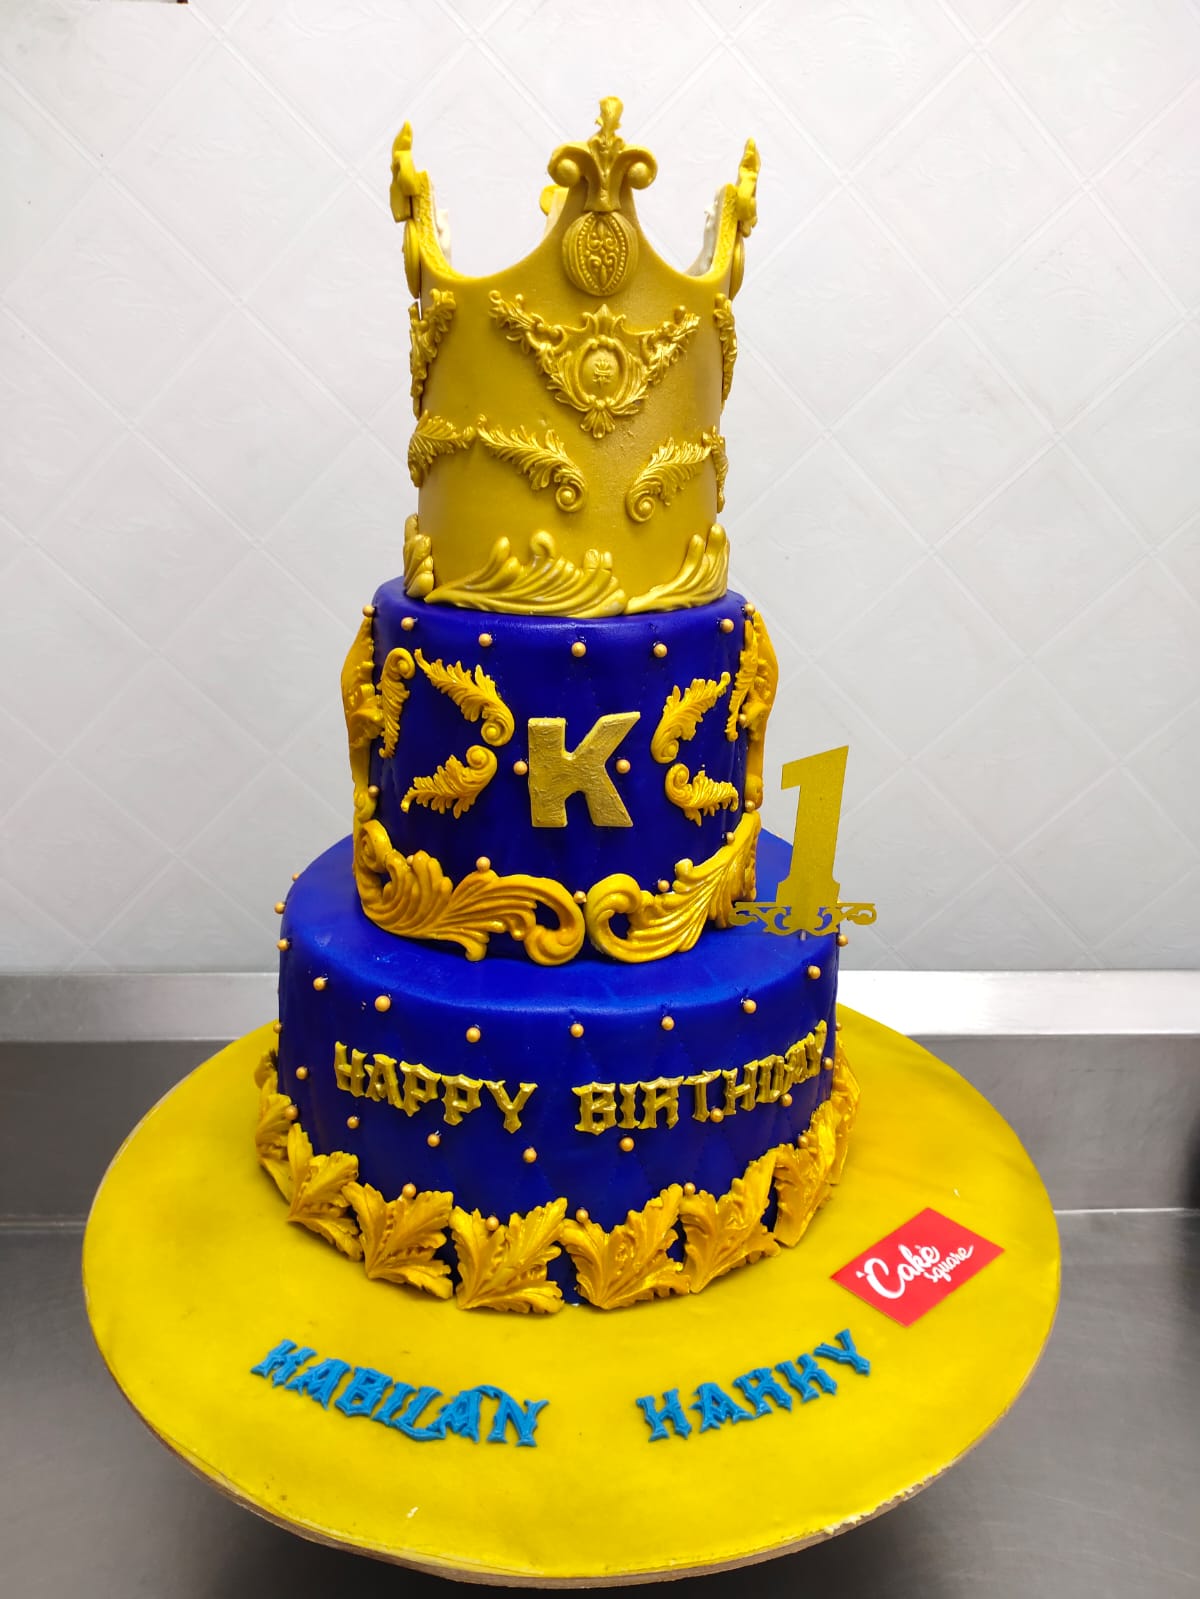 6kg 3 Step Chocolate Cake Decorating Ideas | 3 Step Cake | 3 Tier Cake  design - YouTube